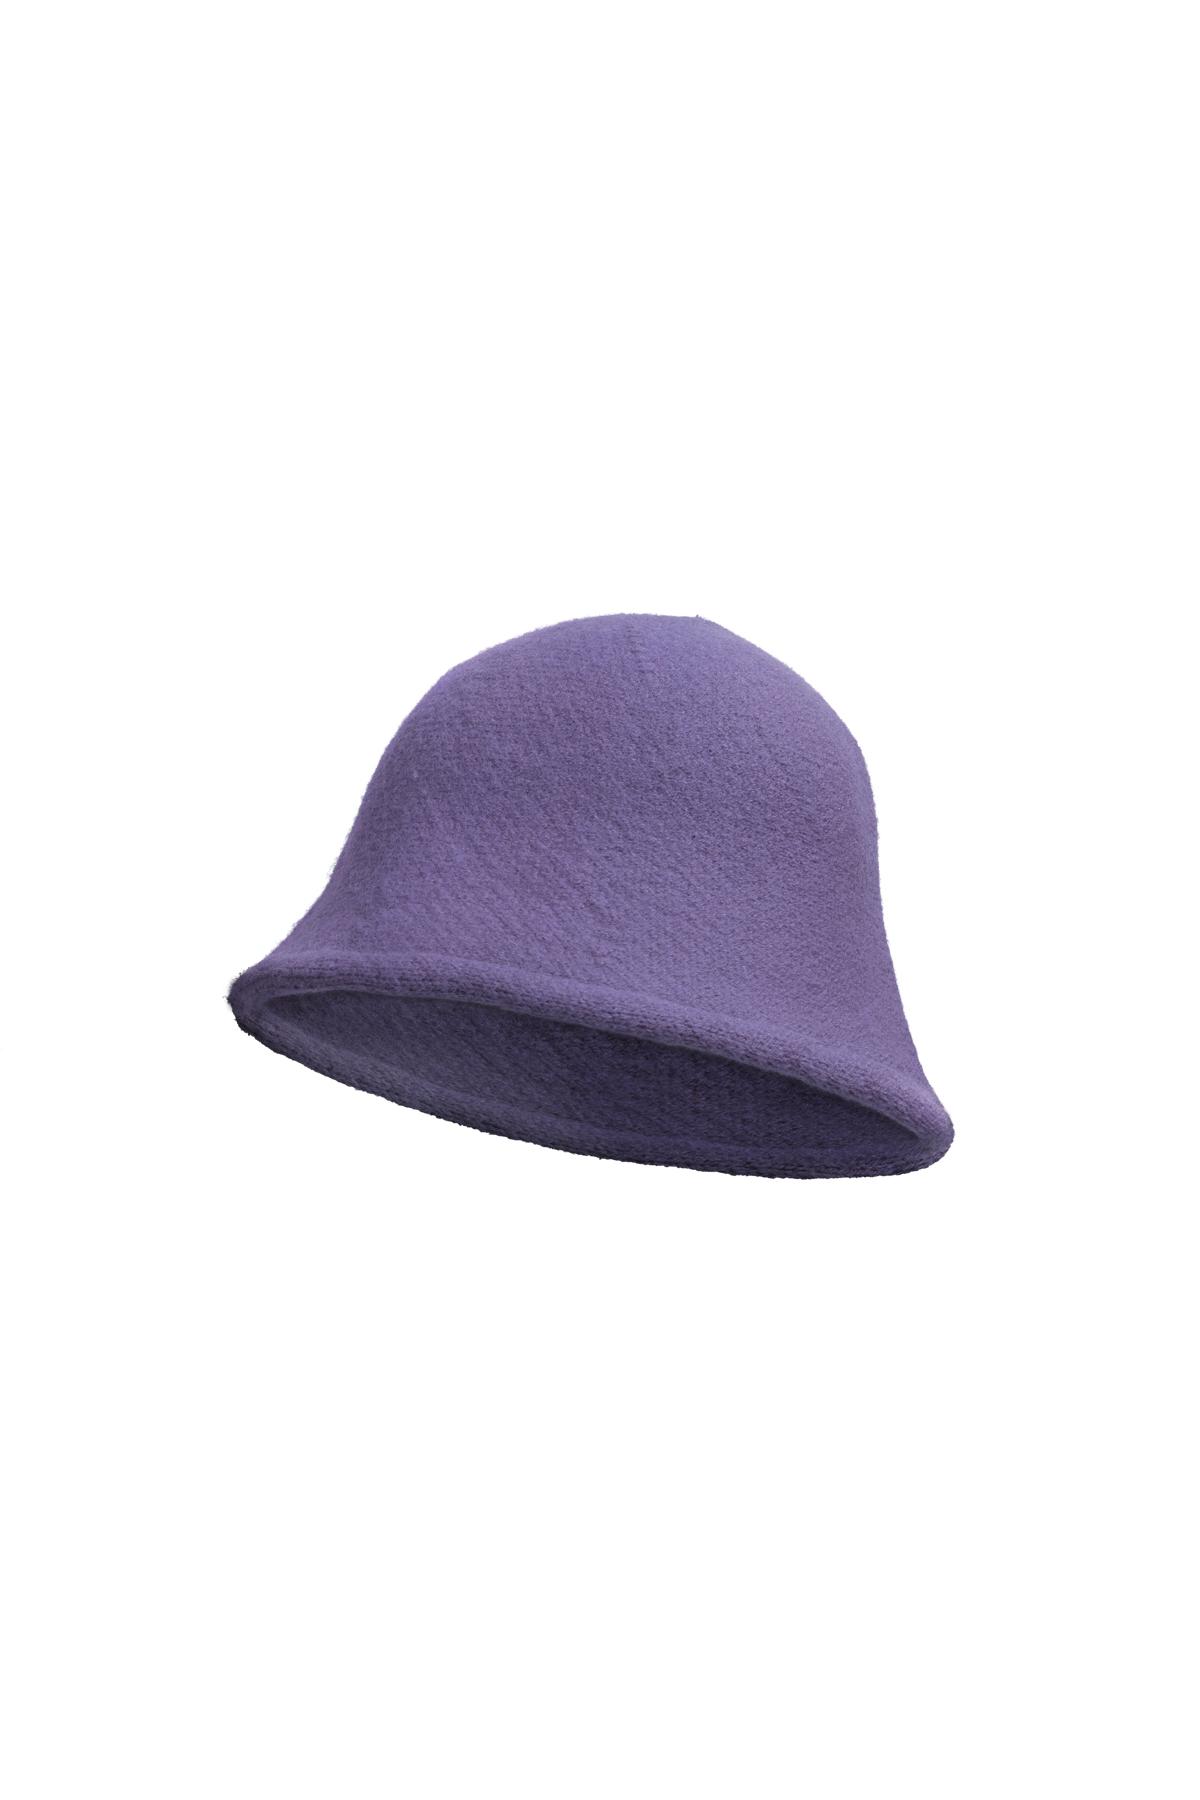 Kova şapka düz renk Purple Acrylic h5 